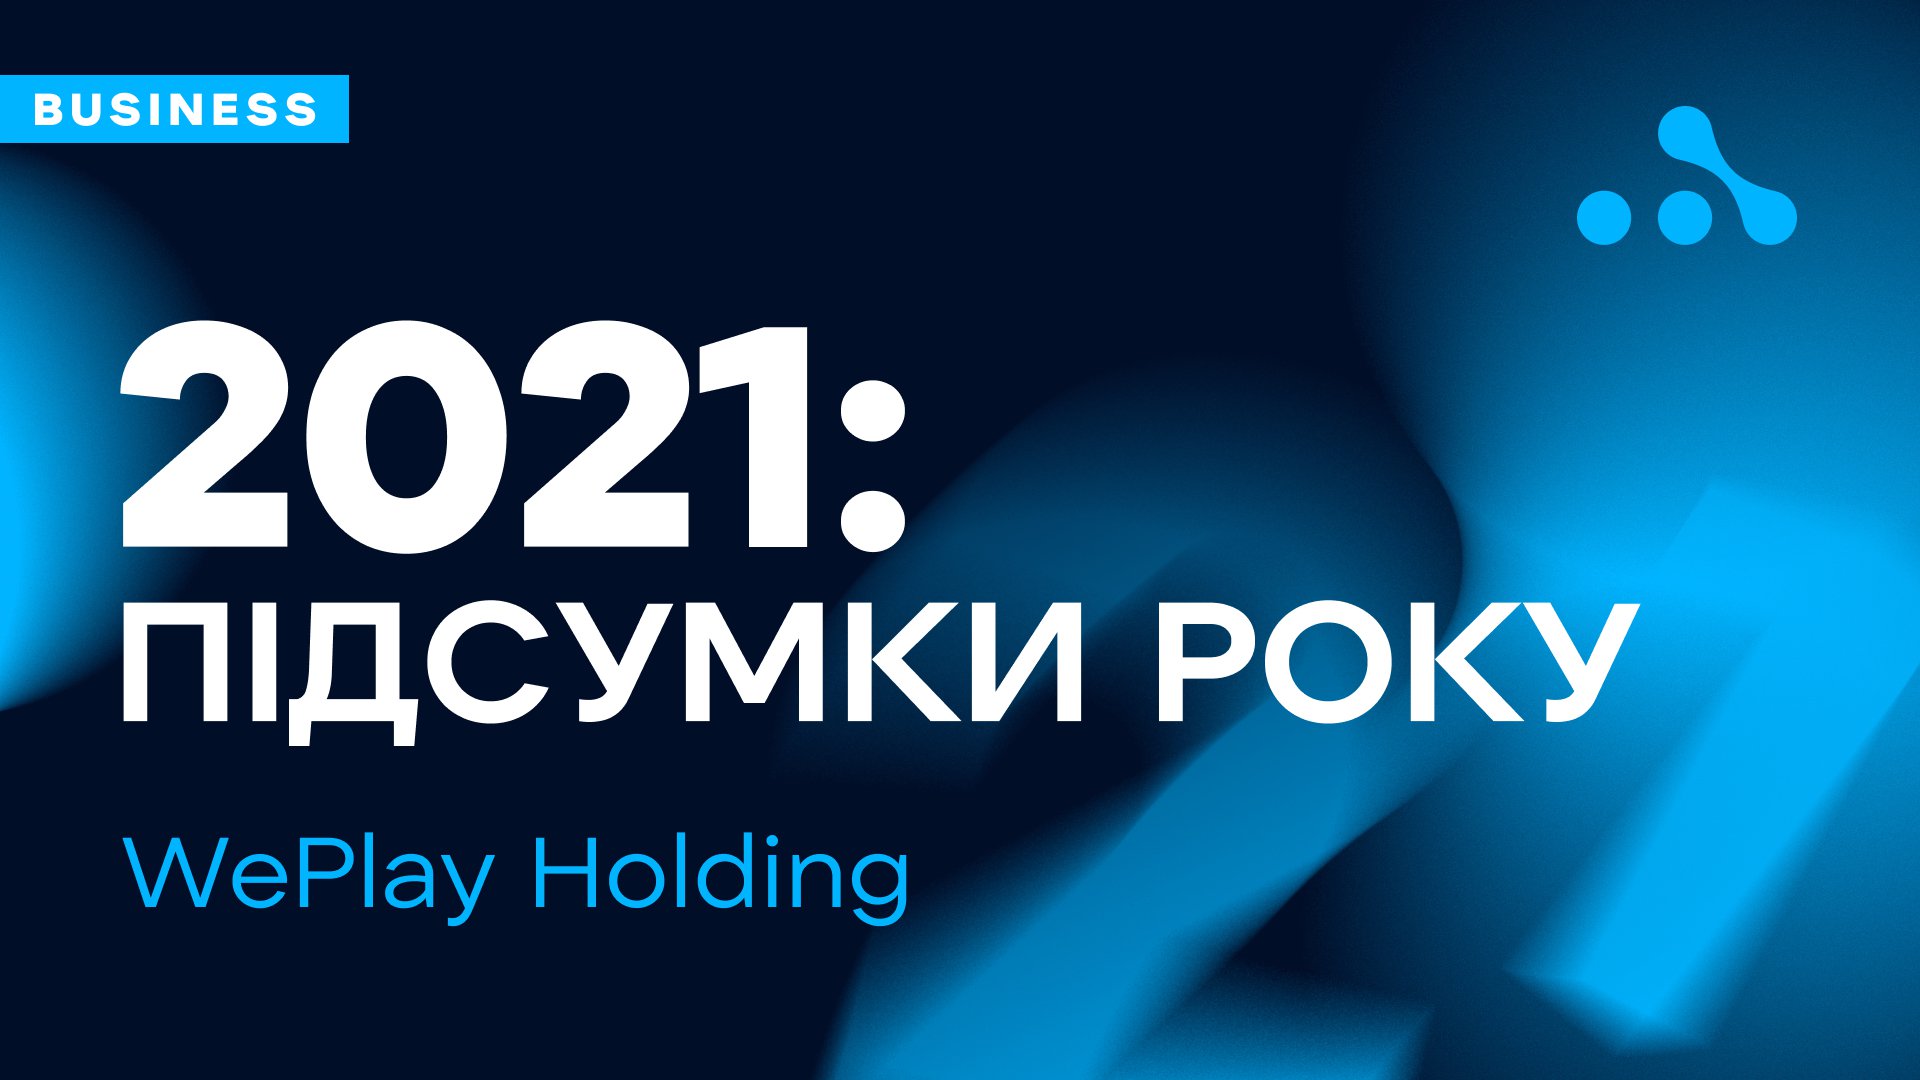 WePlay Holding – 2021: підсумки року. Джерело: WePlay Holding